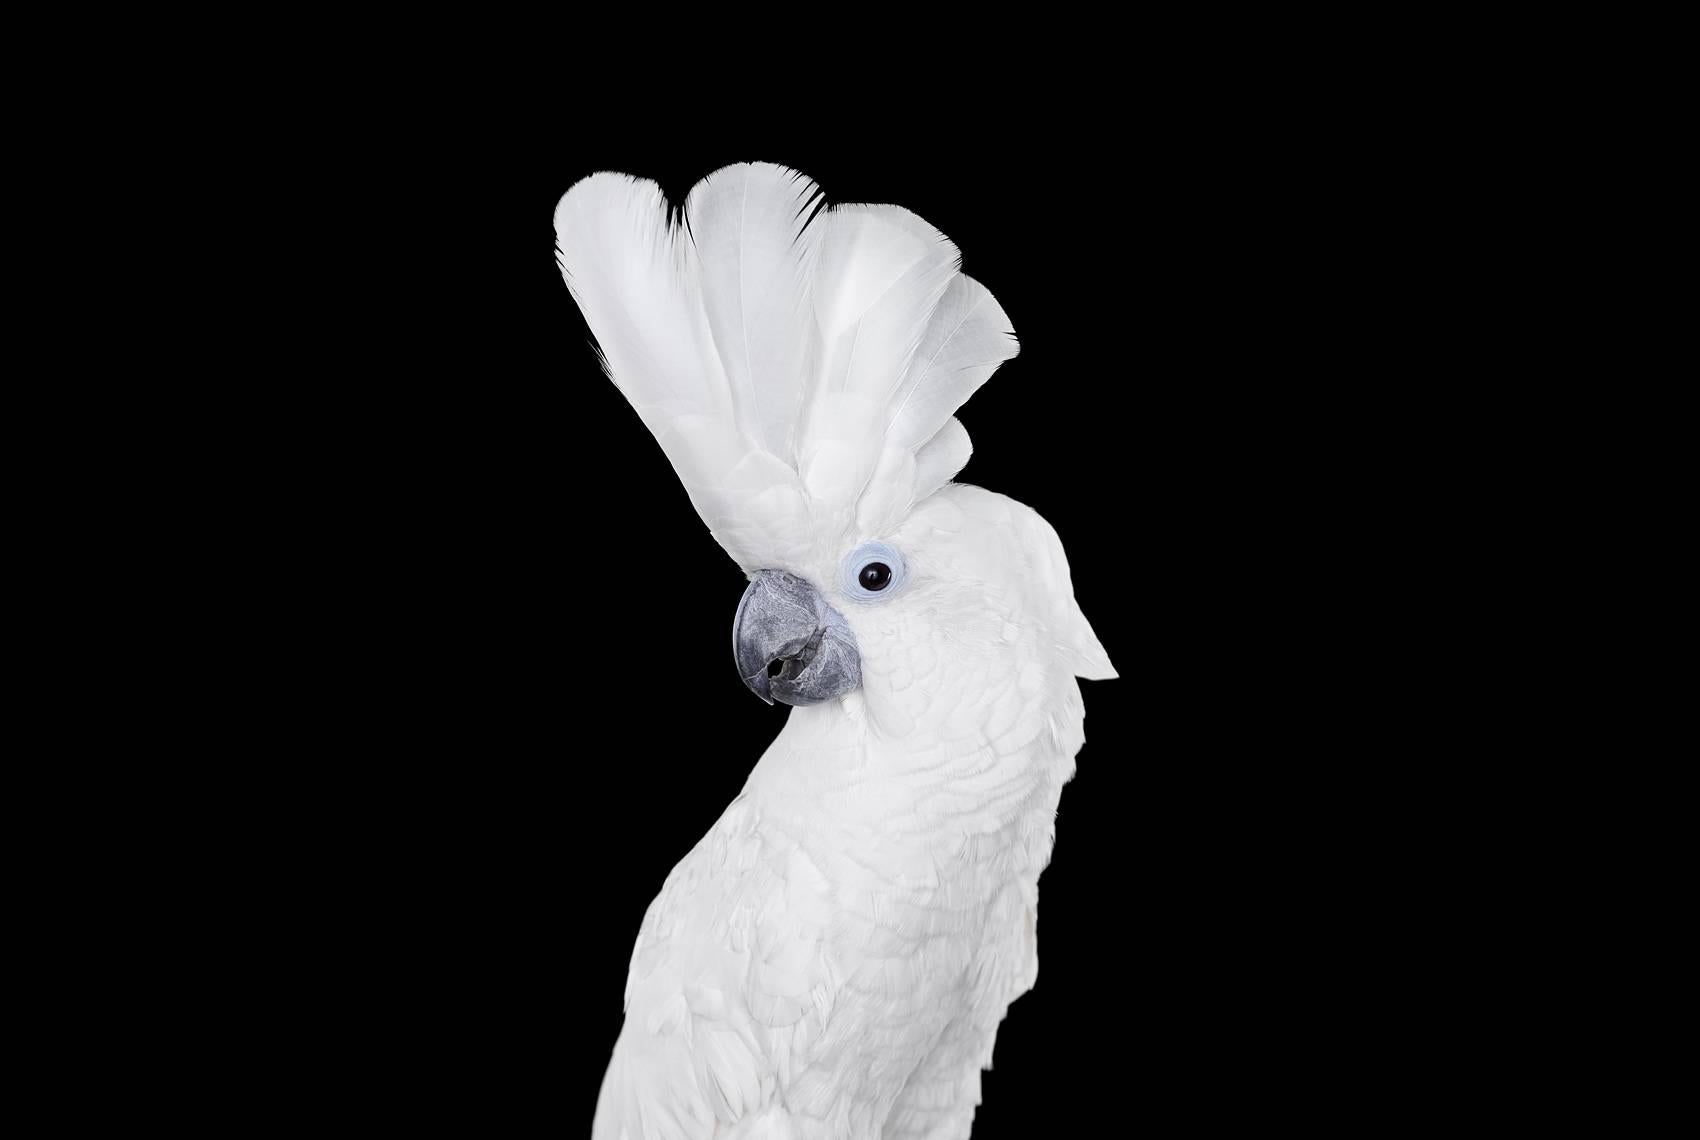 Brad Wilson Portrait Photograph - White Cockatoo #1, Albuquerque, NM, 2016